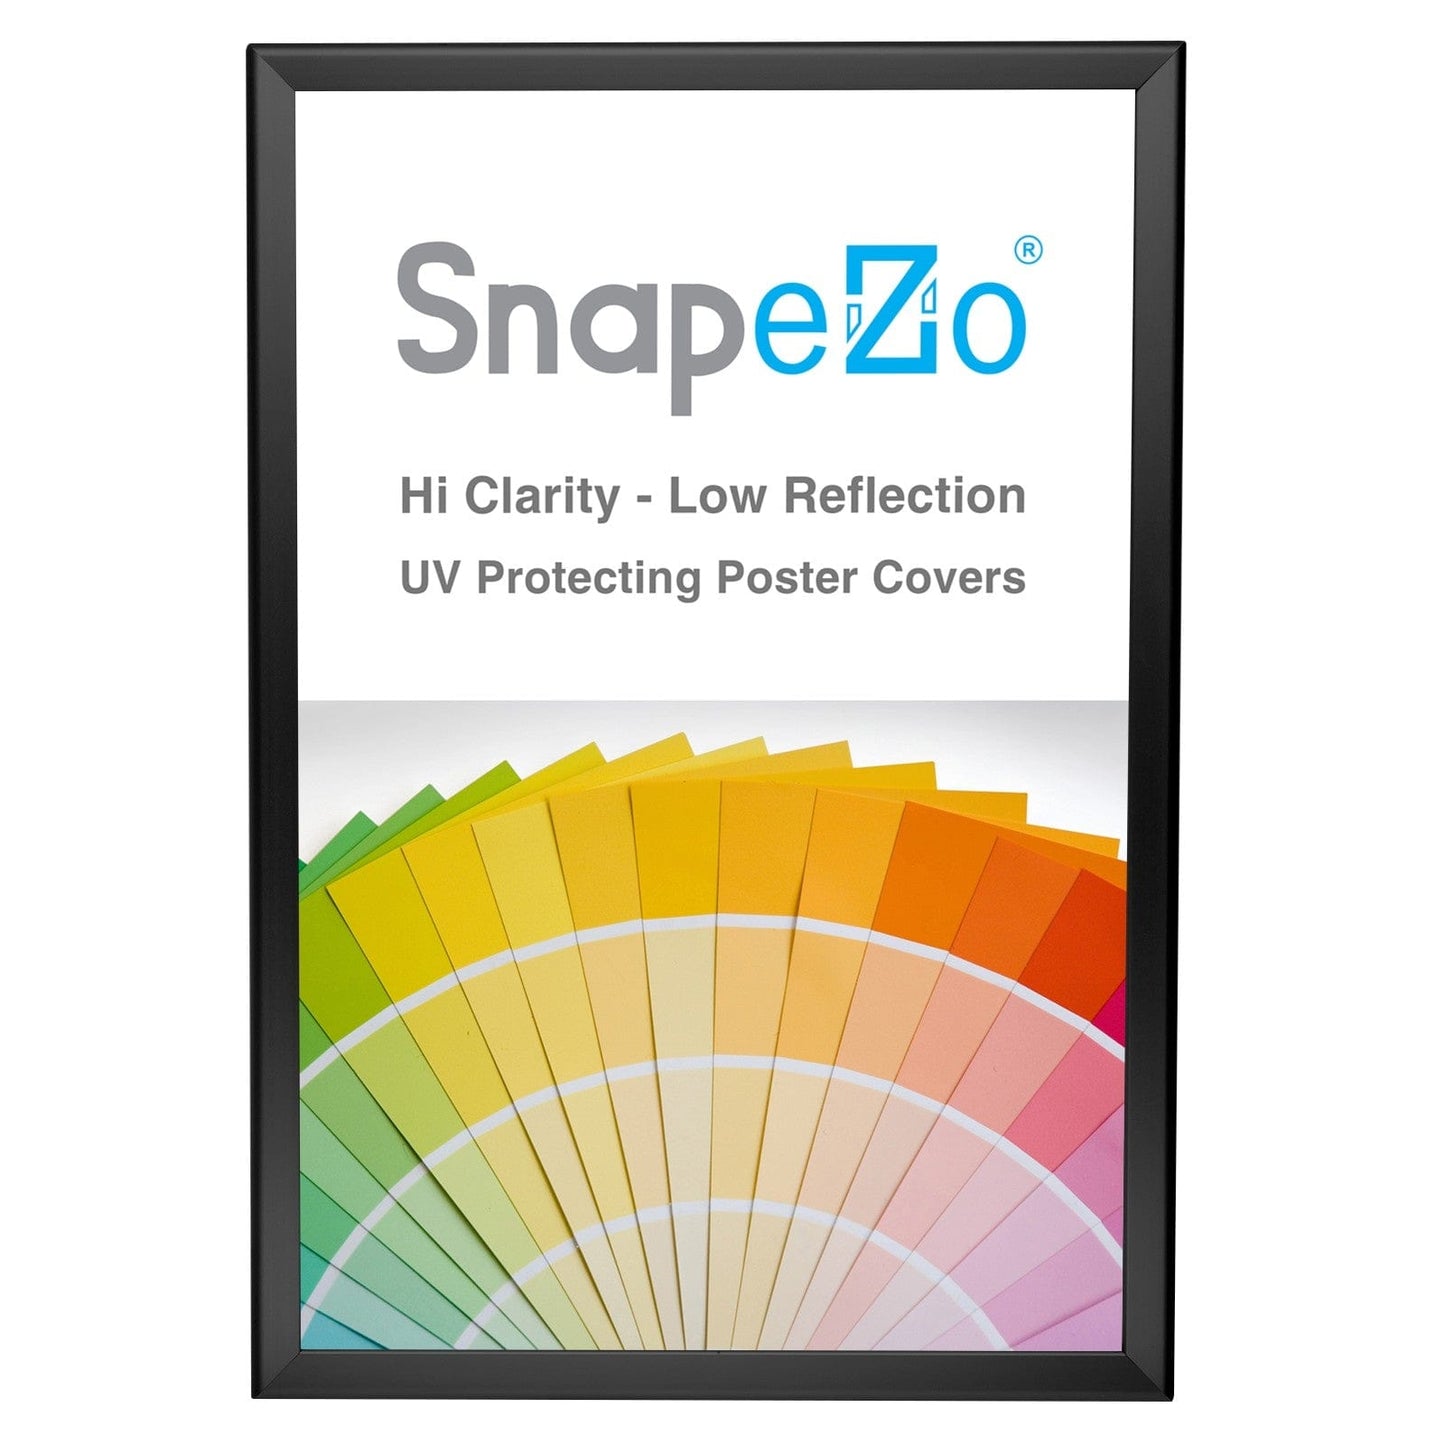 20x29 Black SnapeZo® Poster Snap Frame 1.25" - Snap Frames Direct